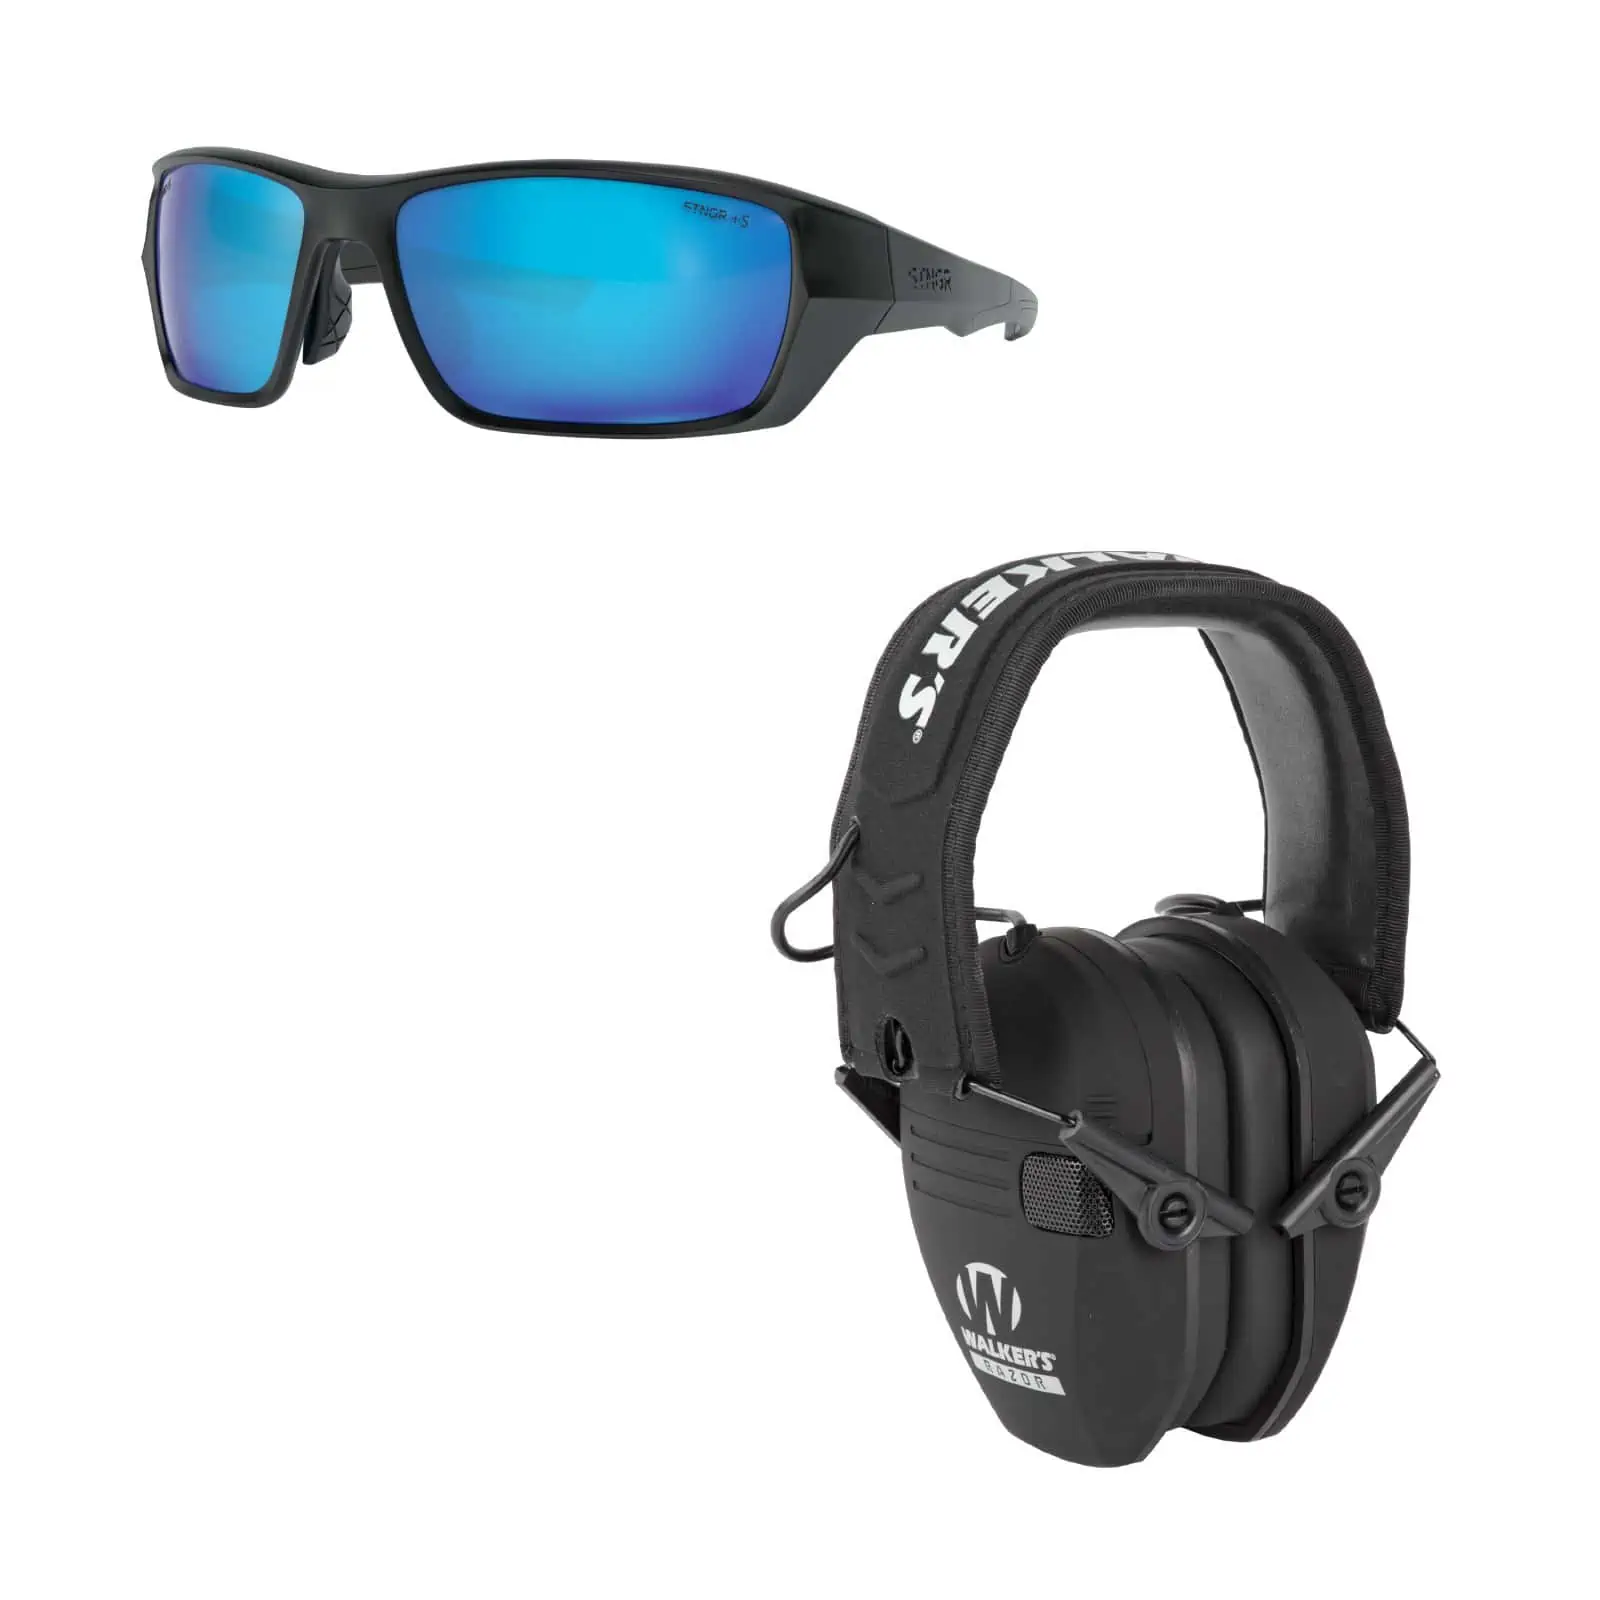 STNGR Alpine Ballistic Glasses + Walker's Electronic Earmuffs